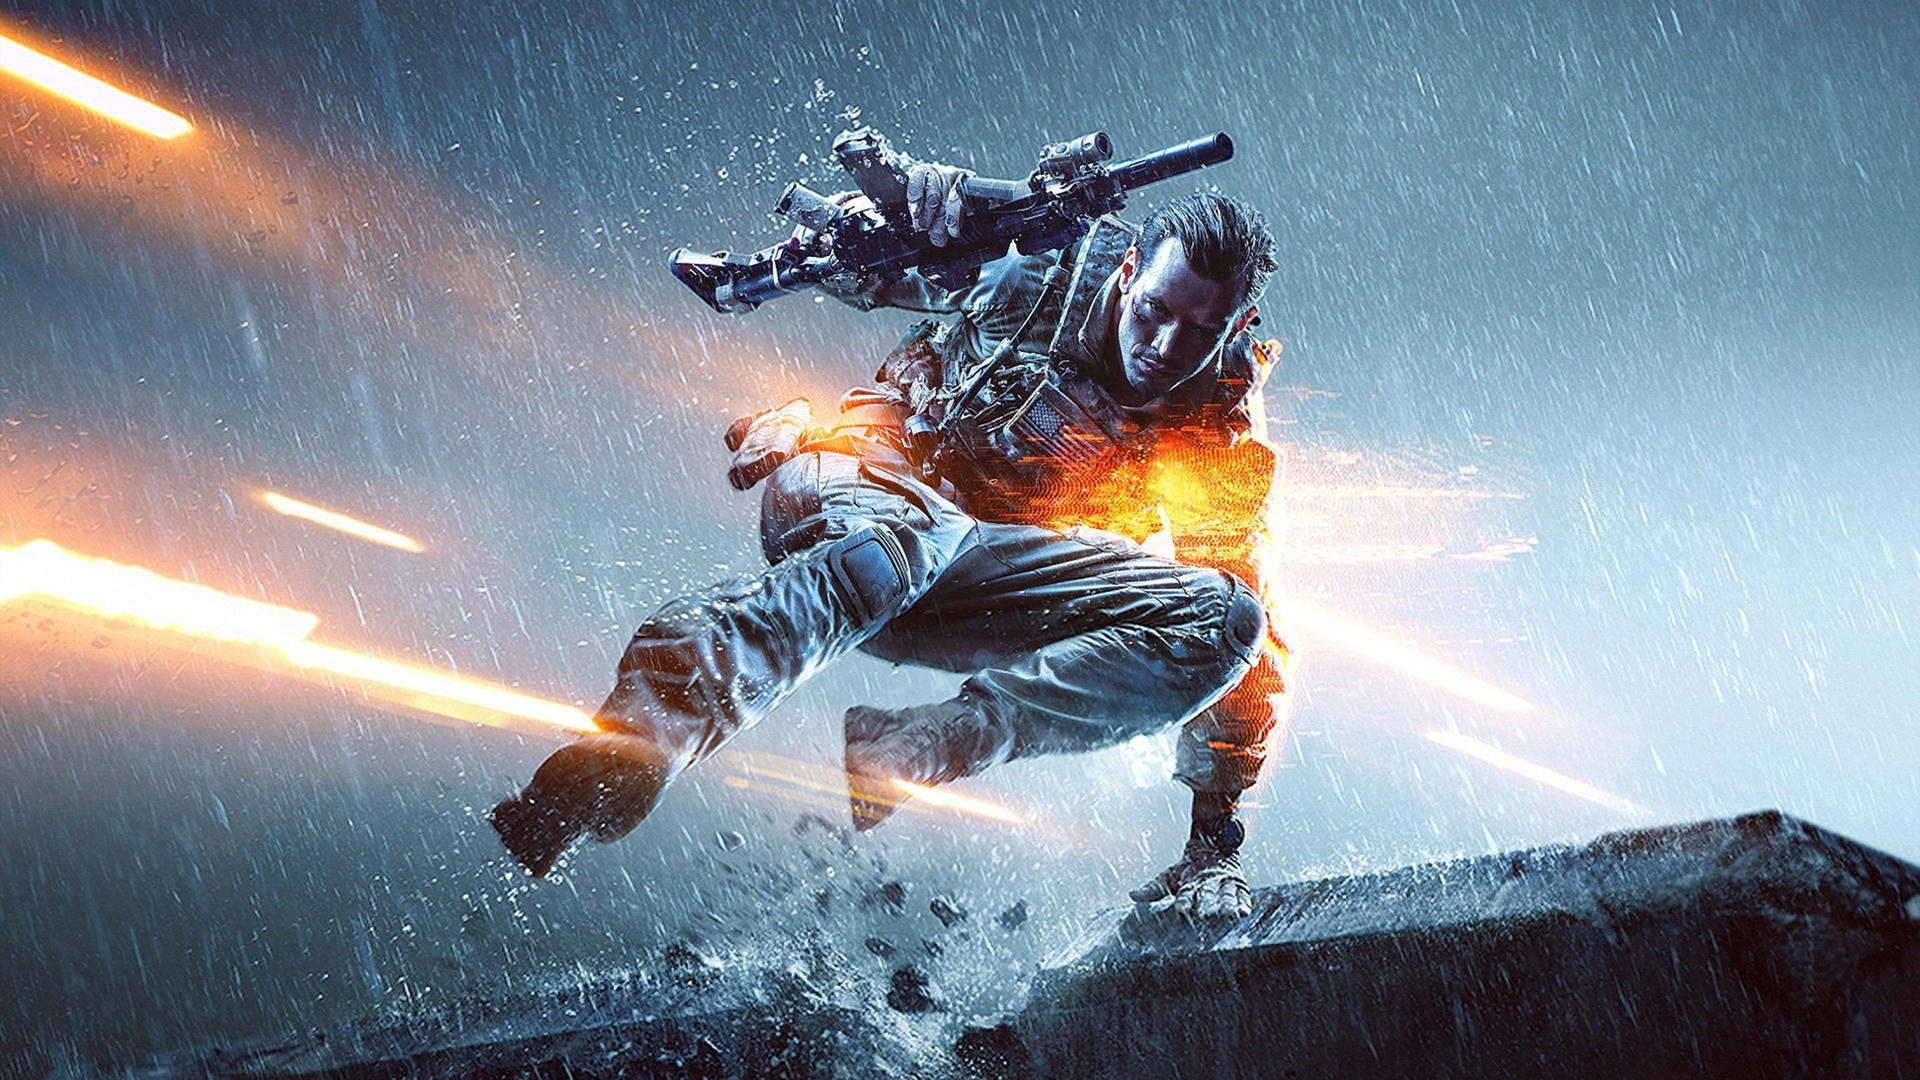 Battlefield 4 Character Render In High Definition Wallpaper